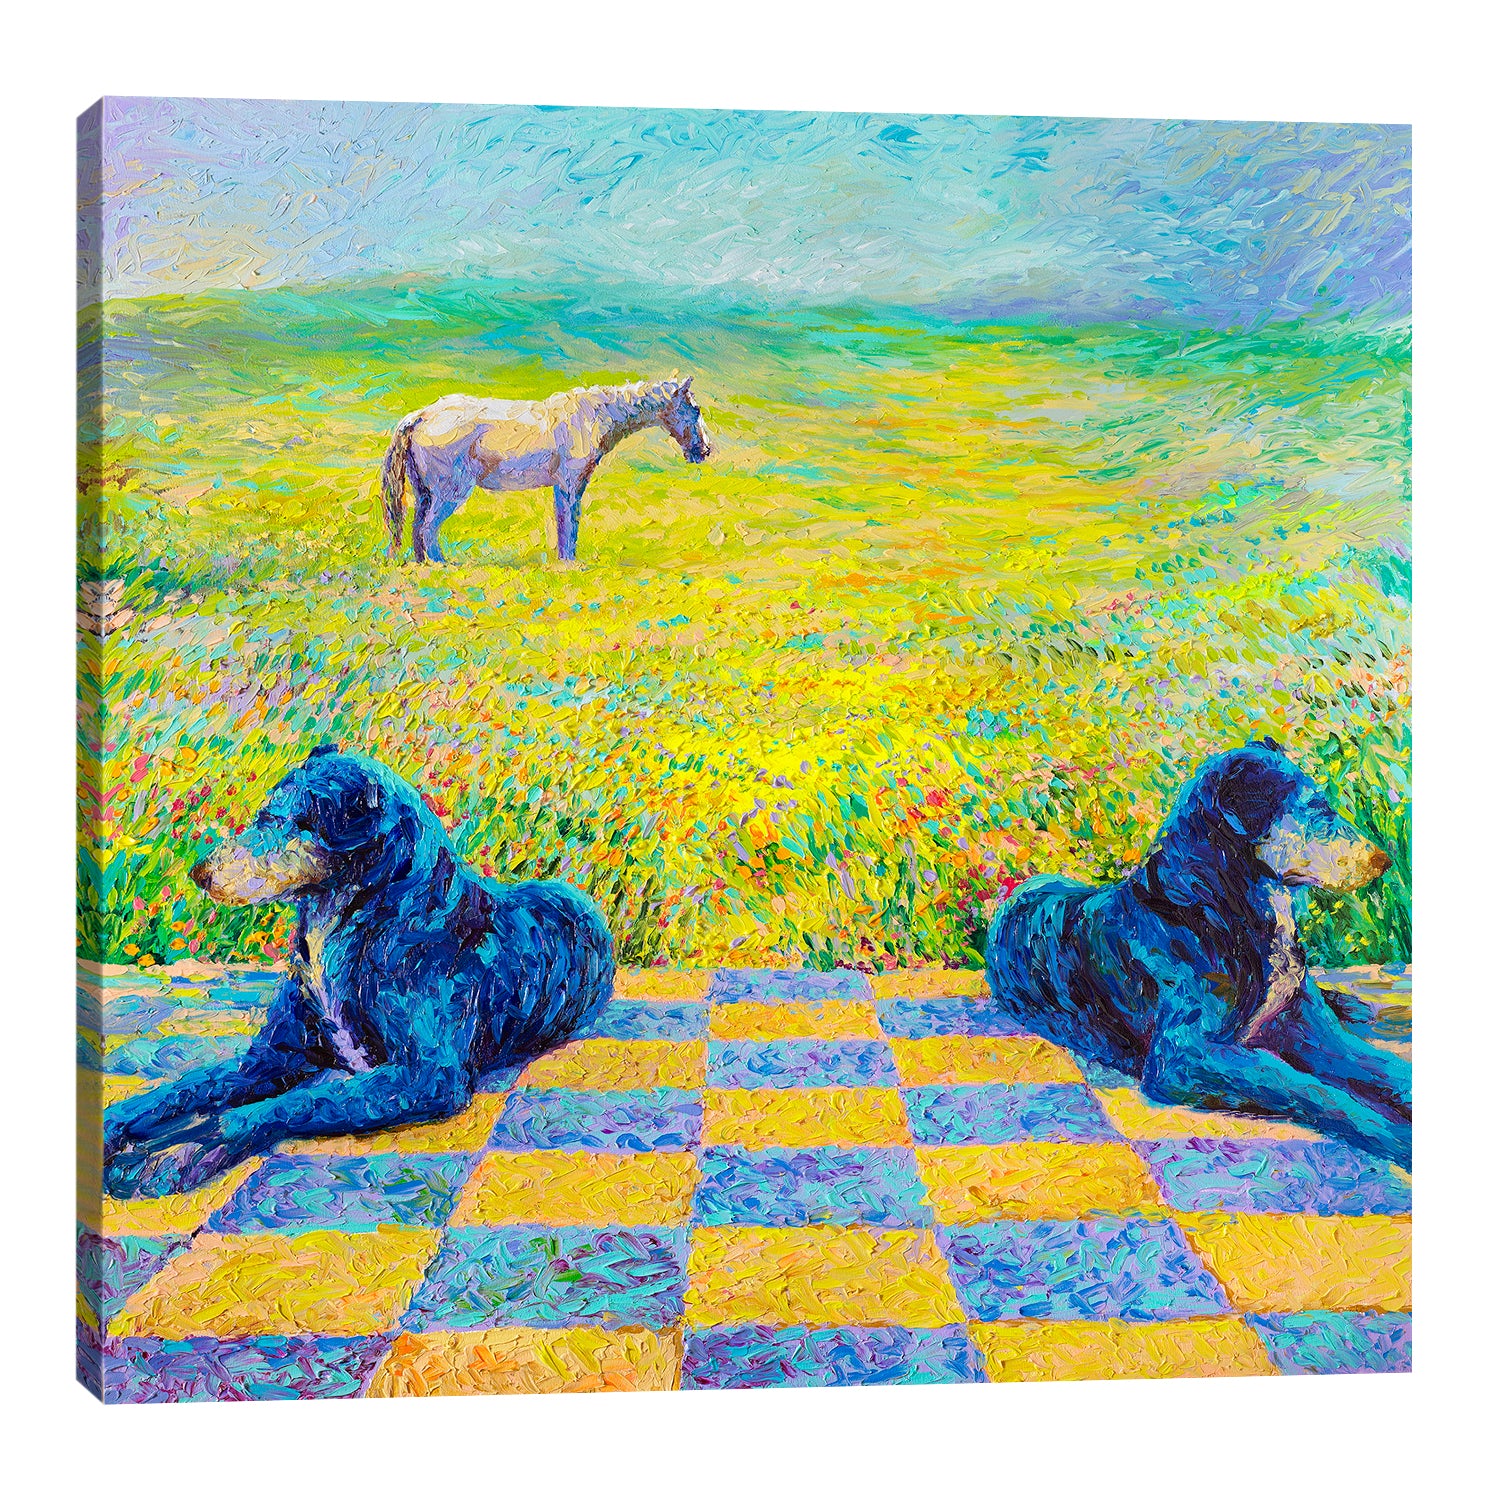 Iris-Scott,Modern & Contemporary,Animals,animals,dogs,horses,mountains,blur,tiles,squares,green,yellow,